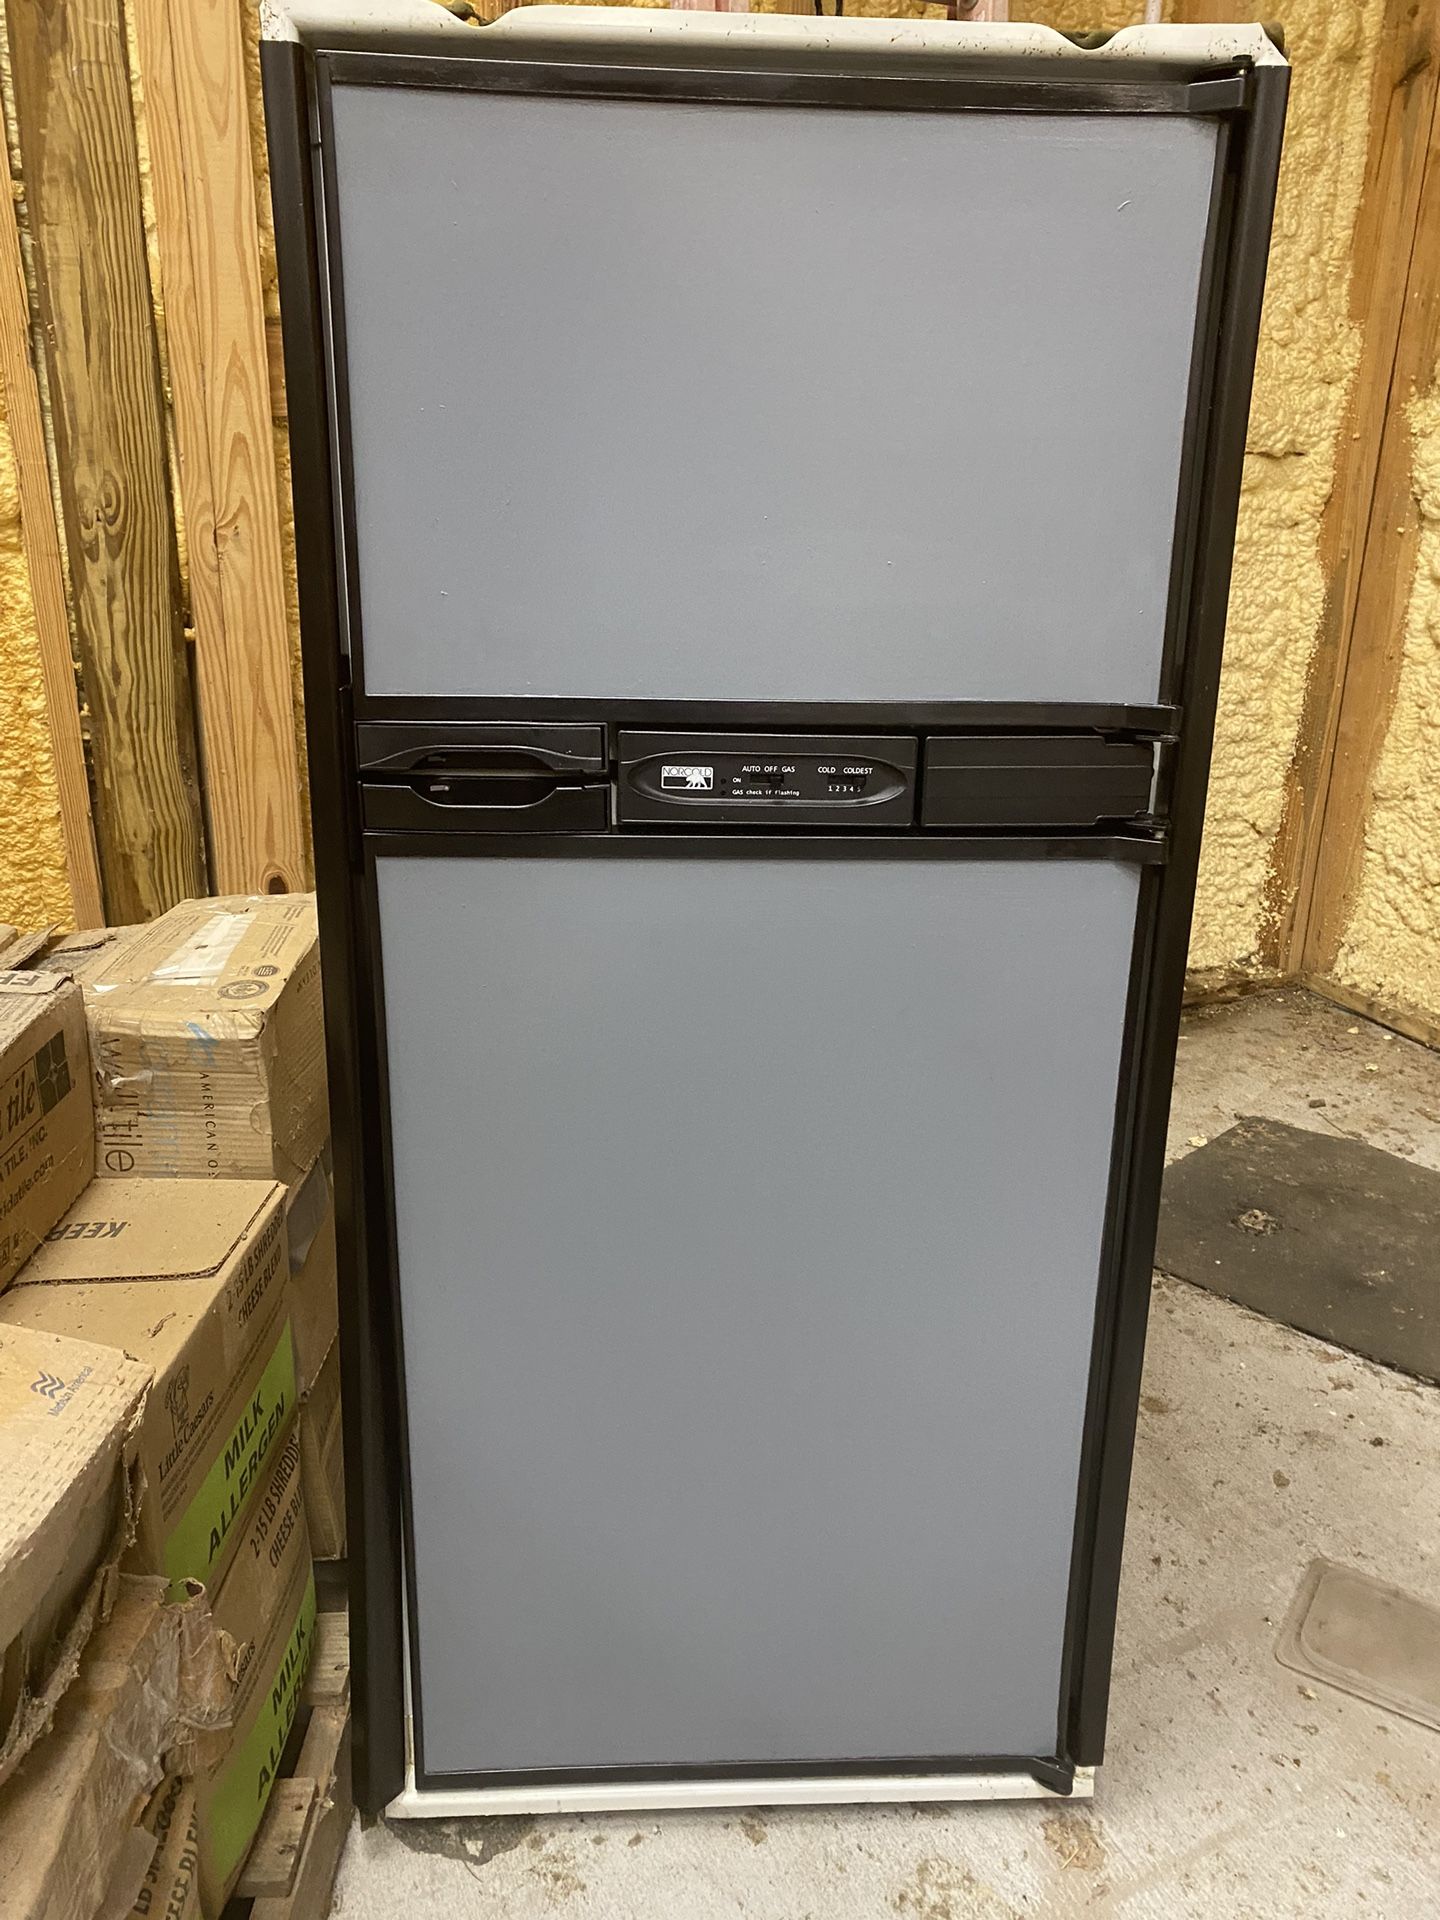 RV Norcold Refrigerator 